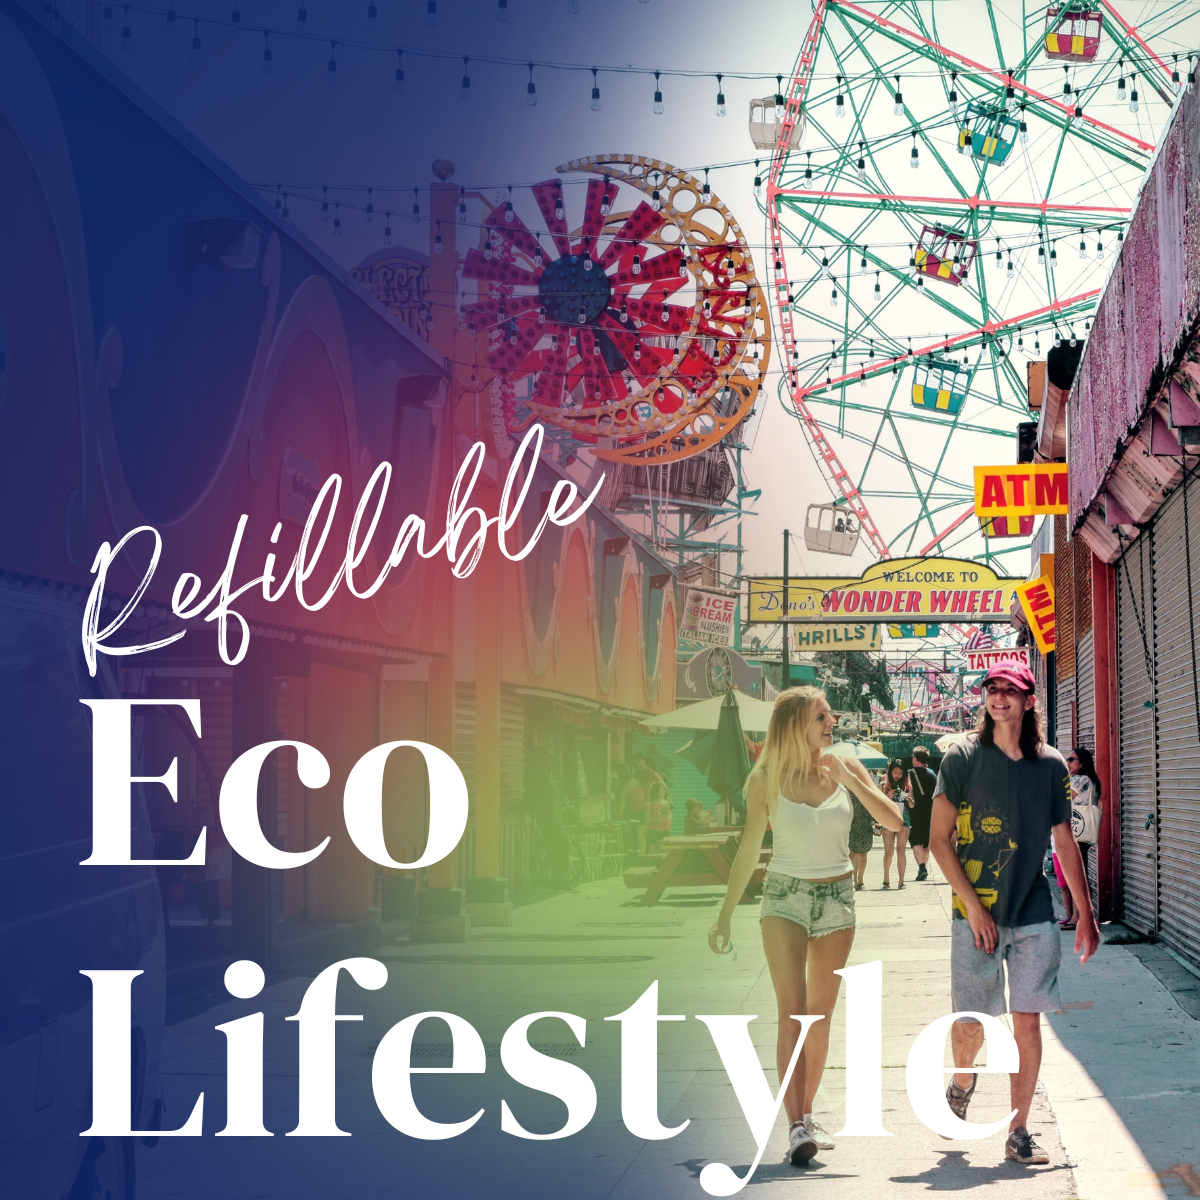 Eco Lifestyle Bundle